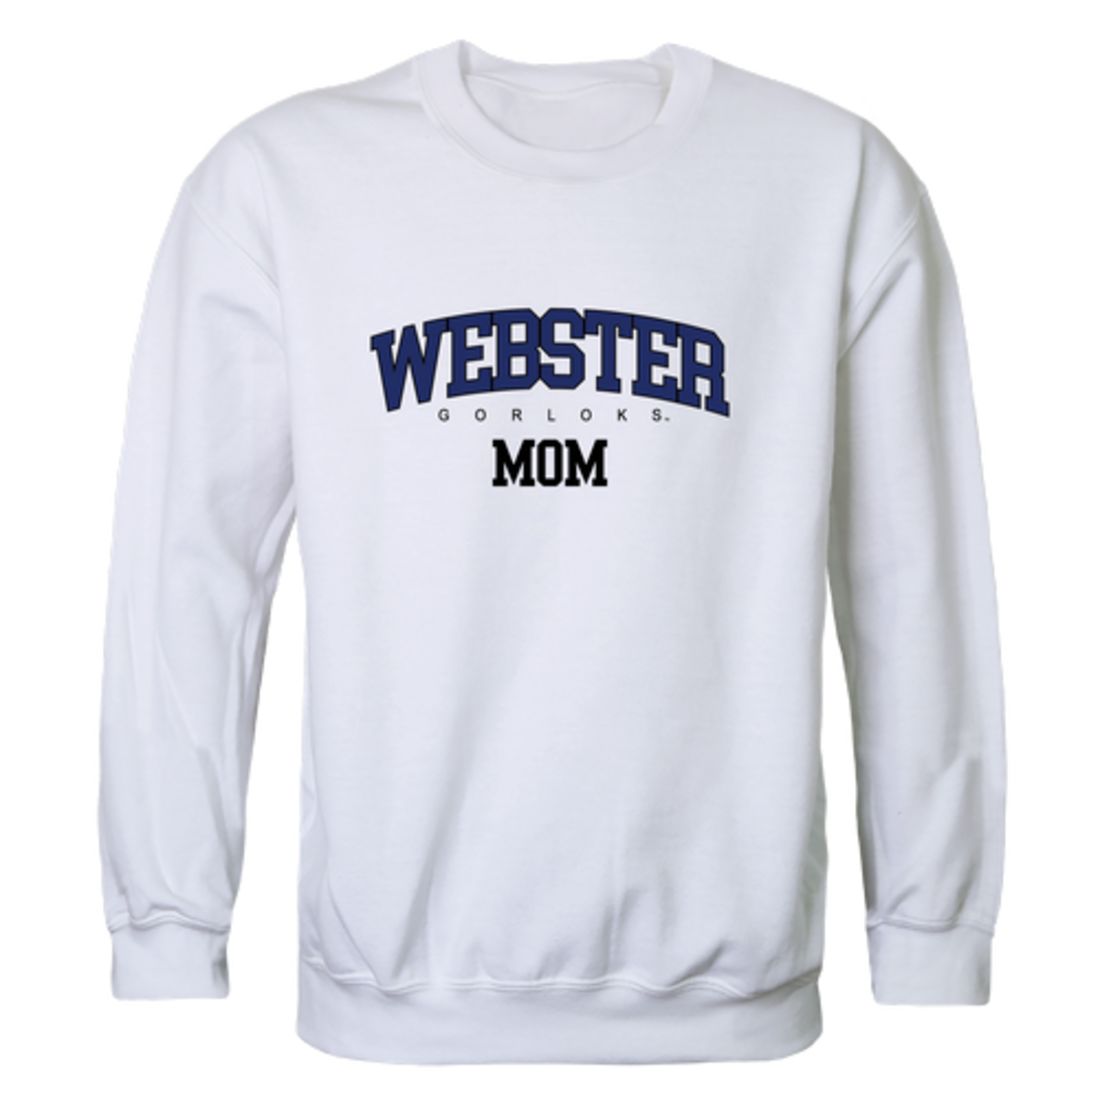 Webster University Gorlocks Mom Fleece Crewneck Pullover Sweatshirt